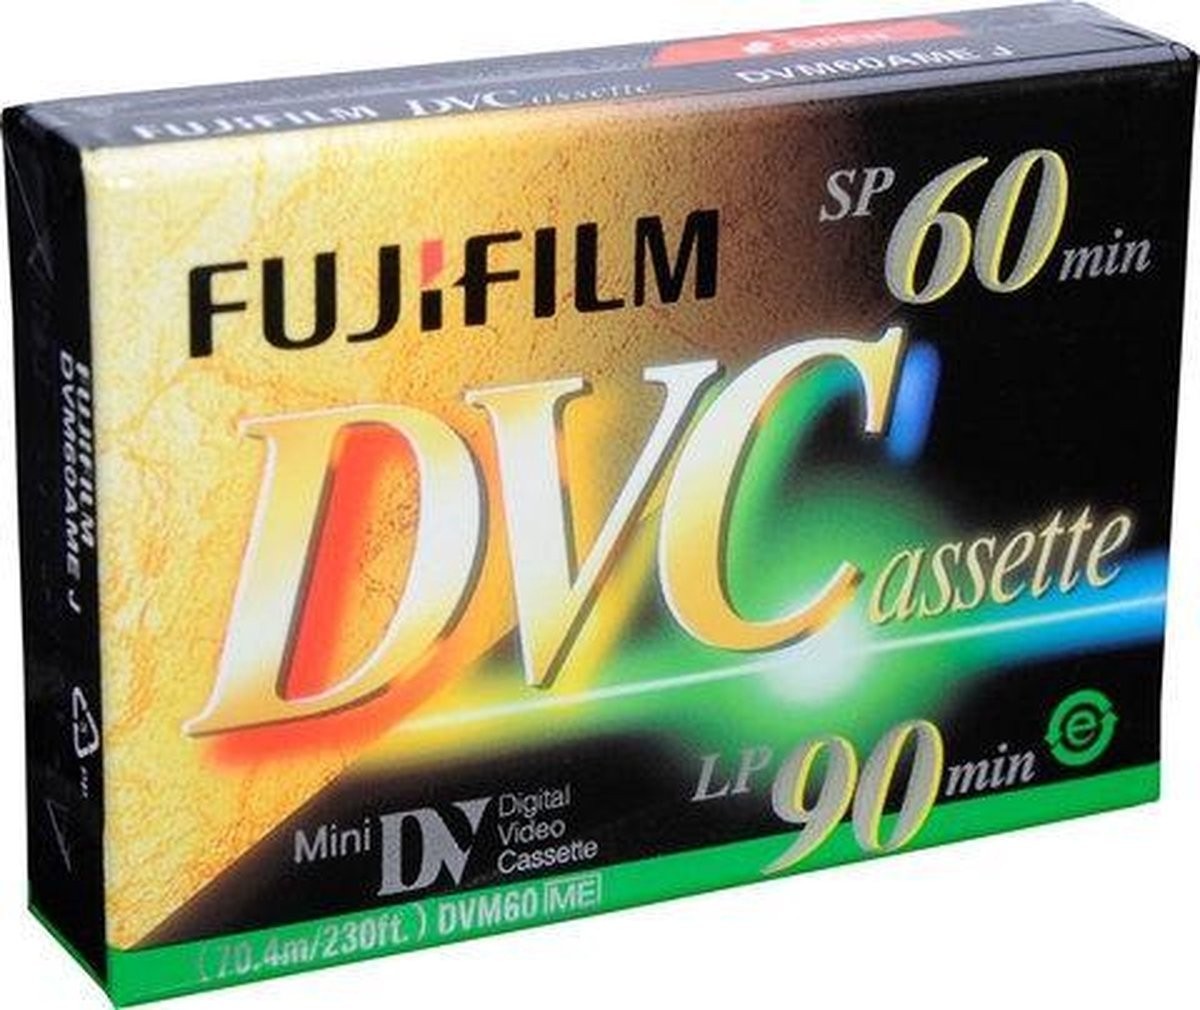 Fujifilm DVC 60 minuten tape